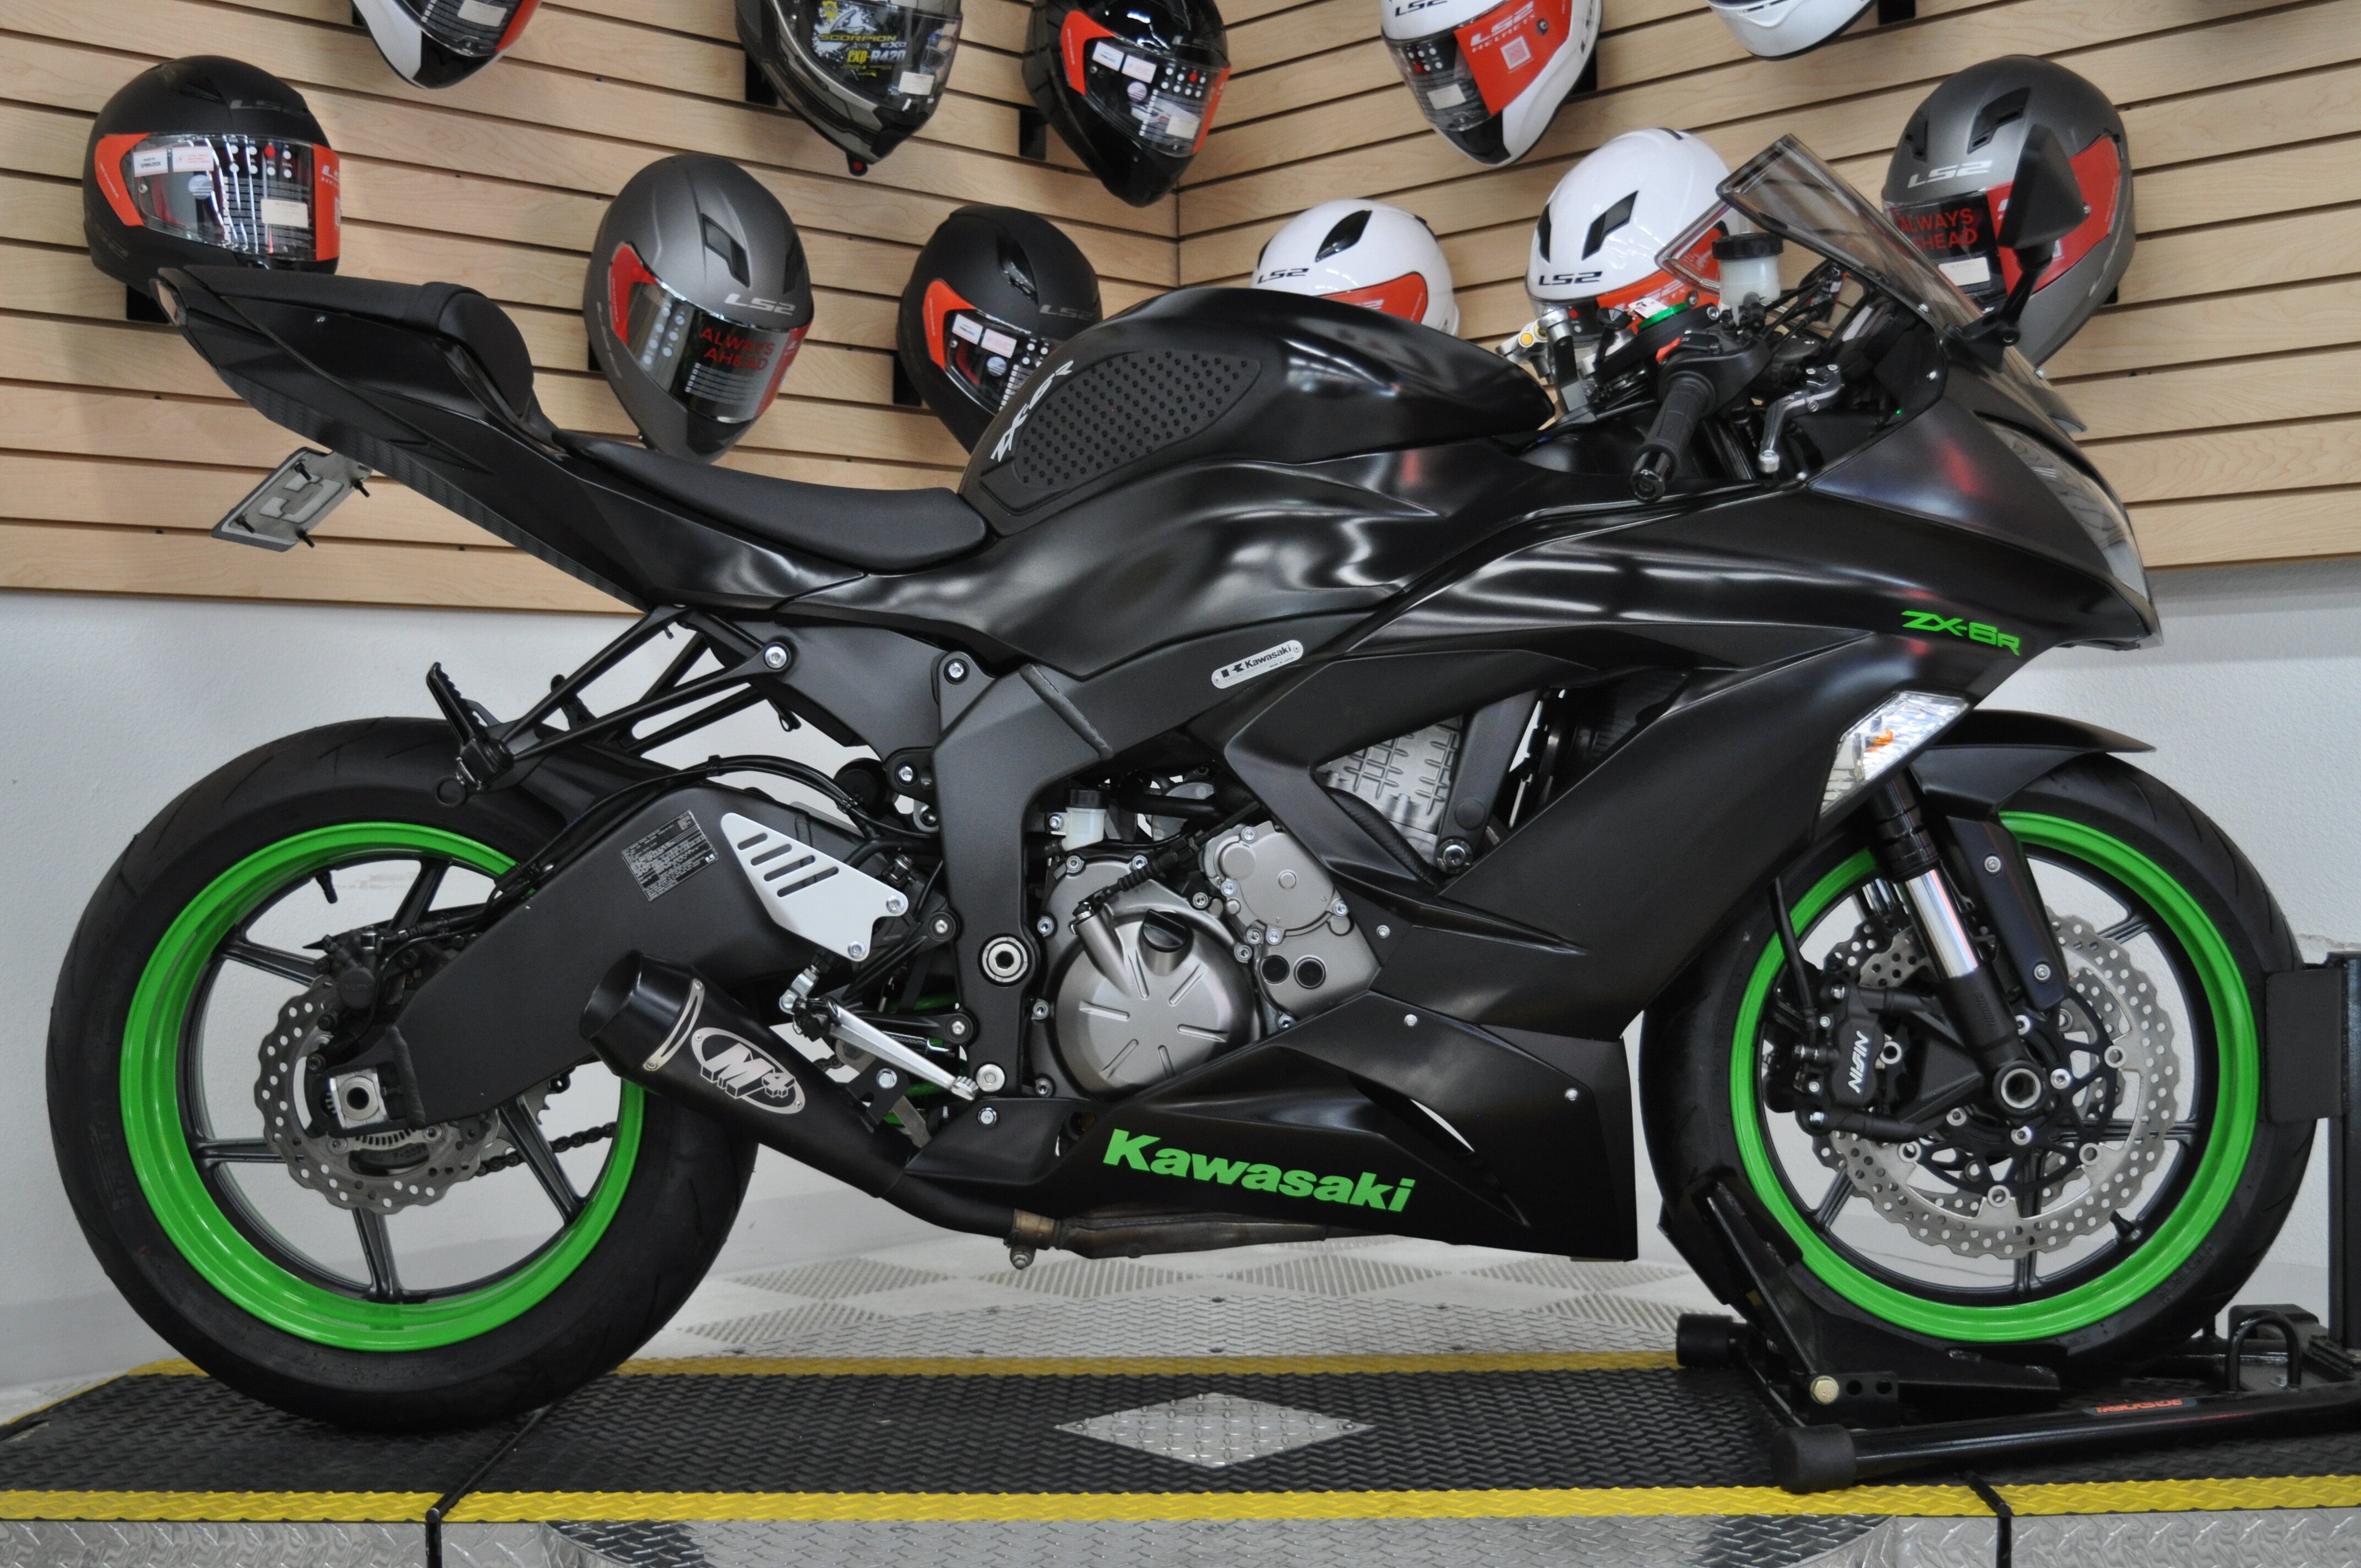 2017 Kawasaki Ninja ZX-6R Motorcycles for Sale - Motorcycles on Autotrader